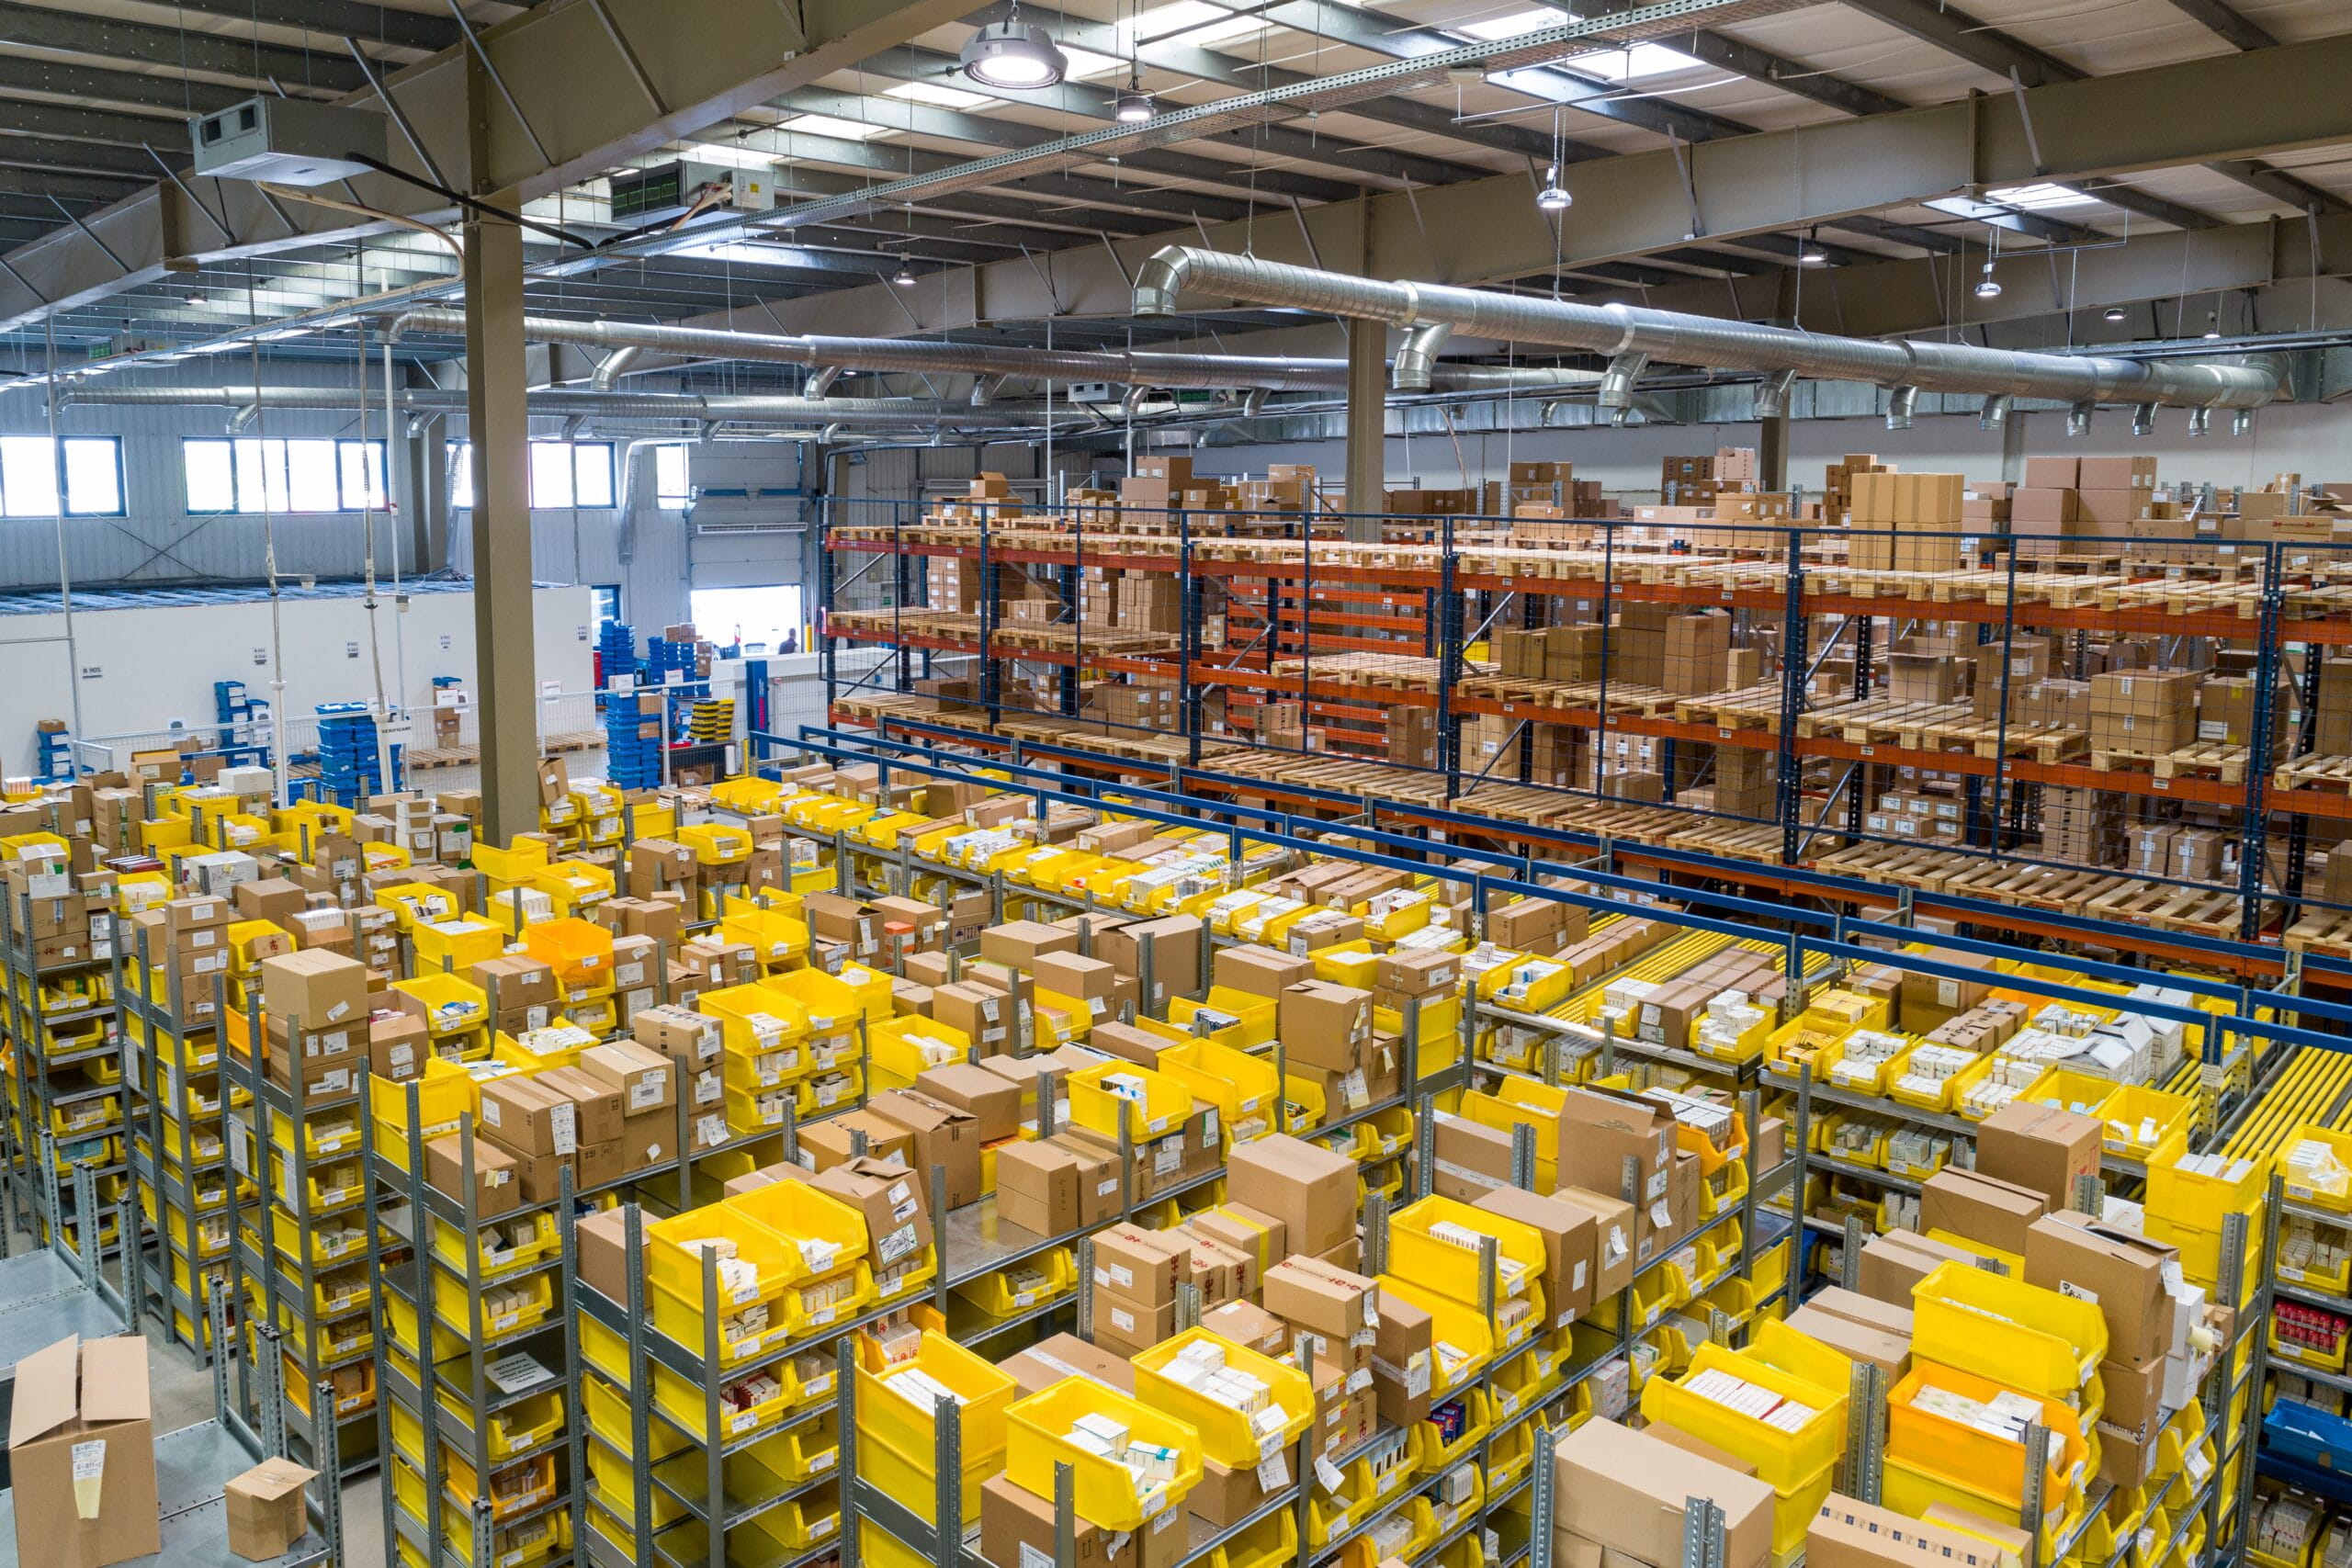 A fully stocked warehousing fulfillment center